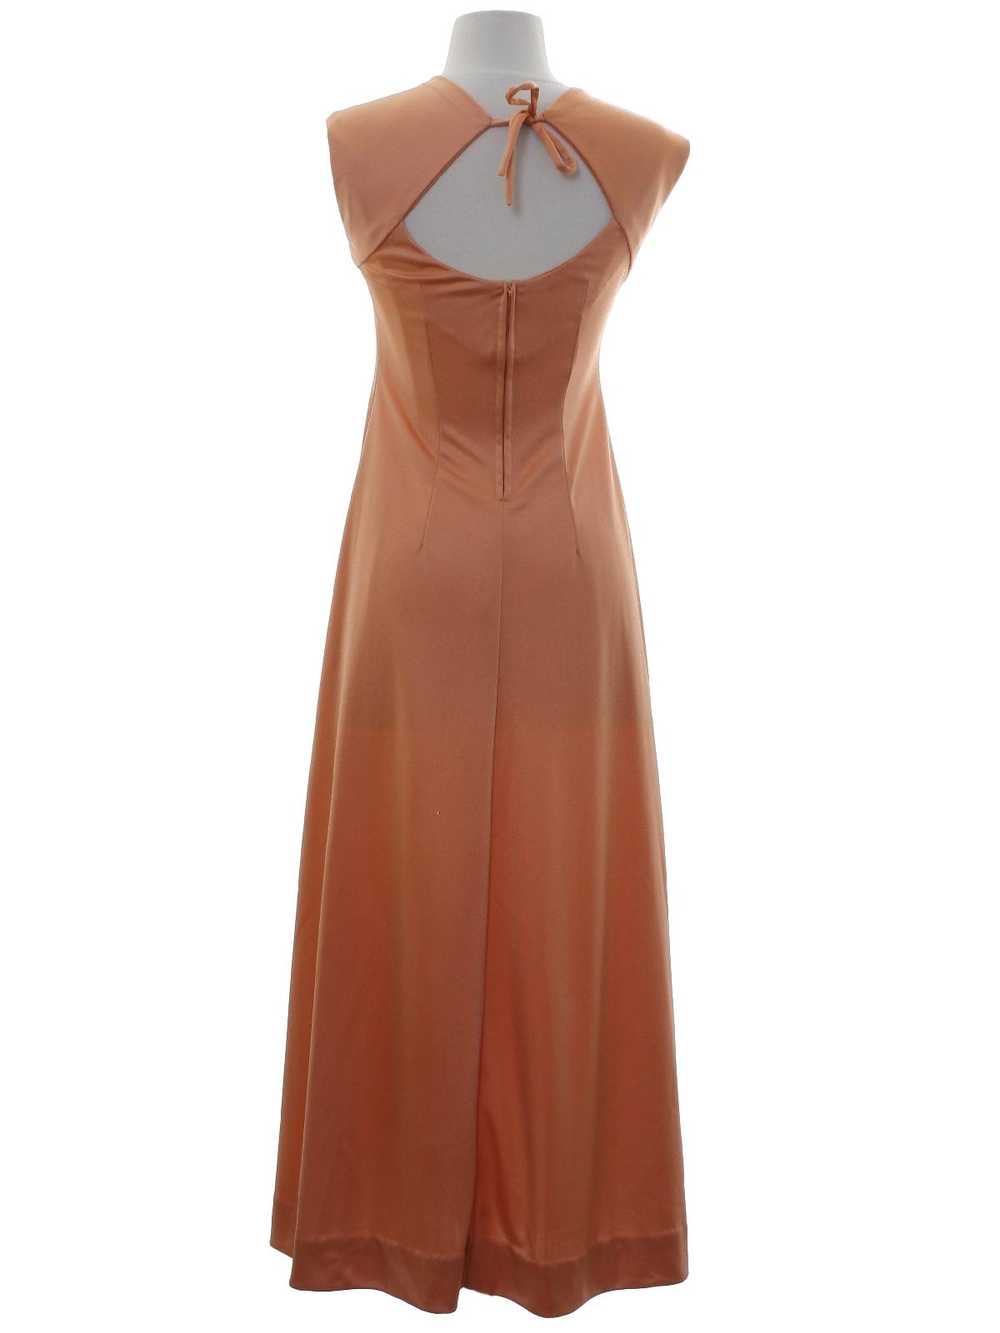 1970's Maxi Dress - image 3